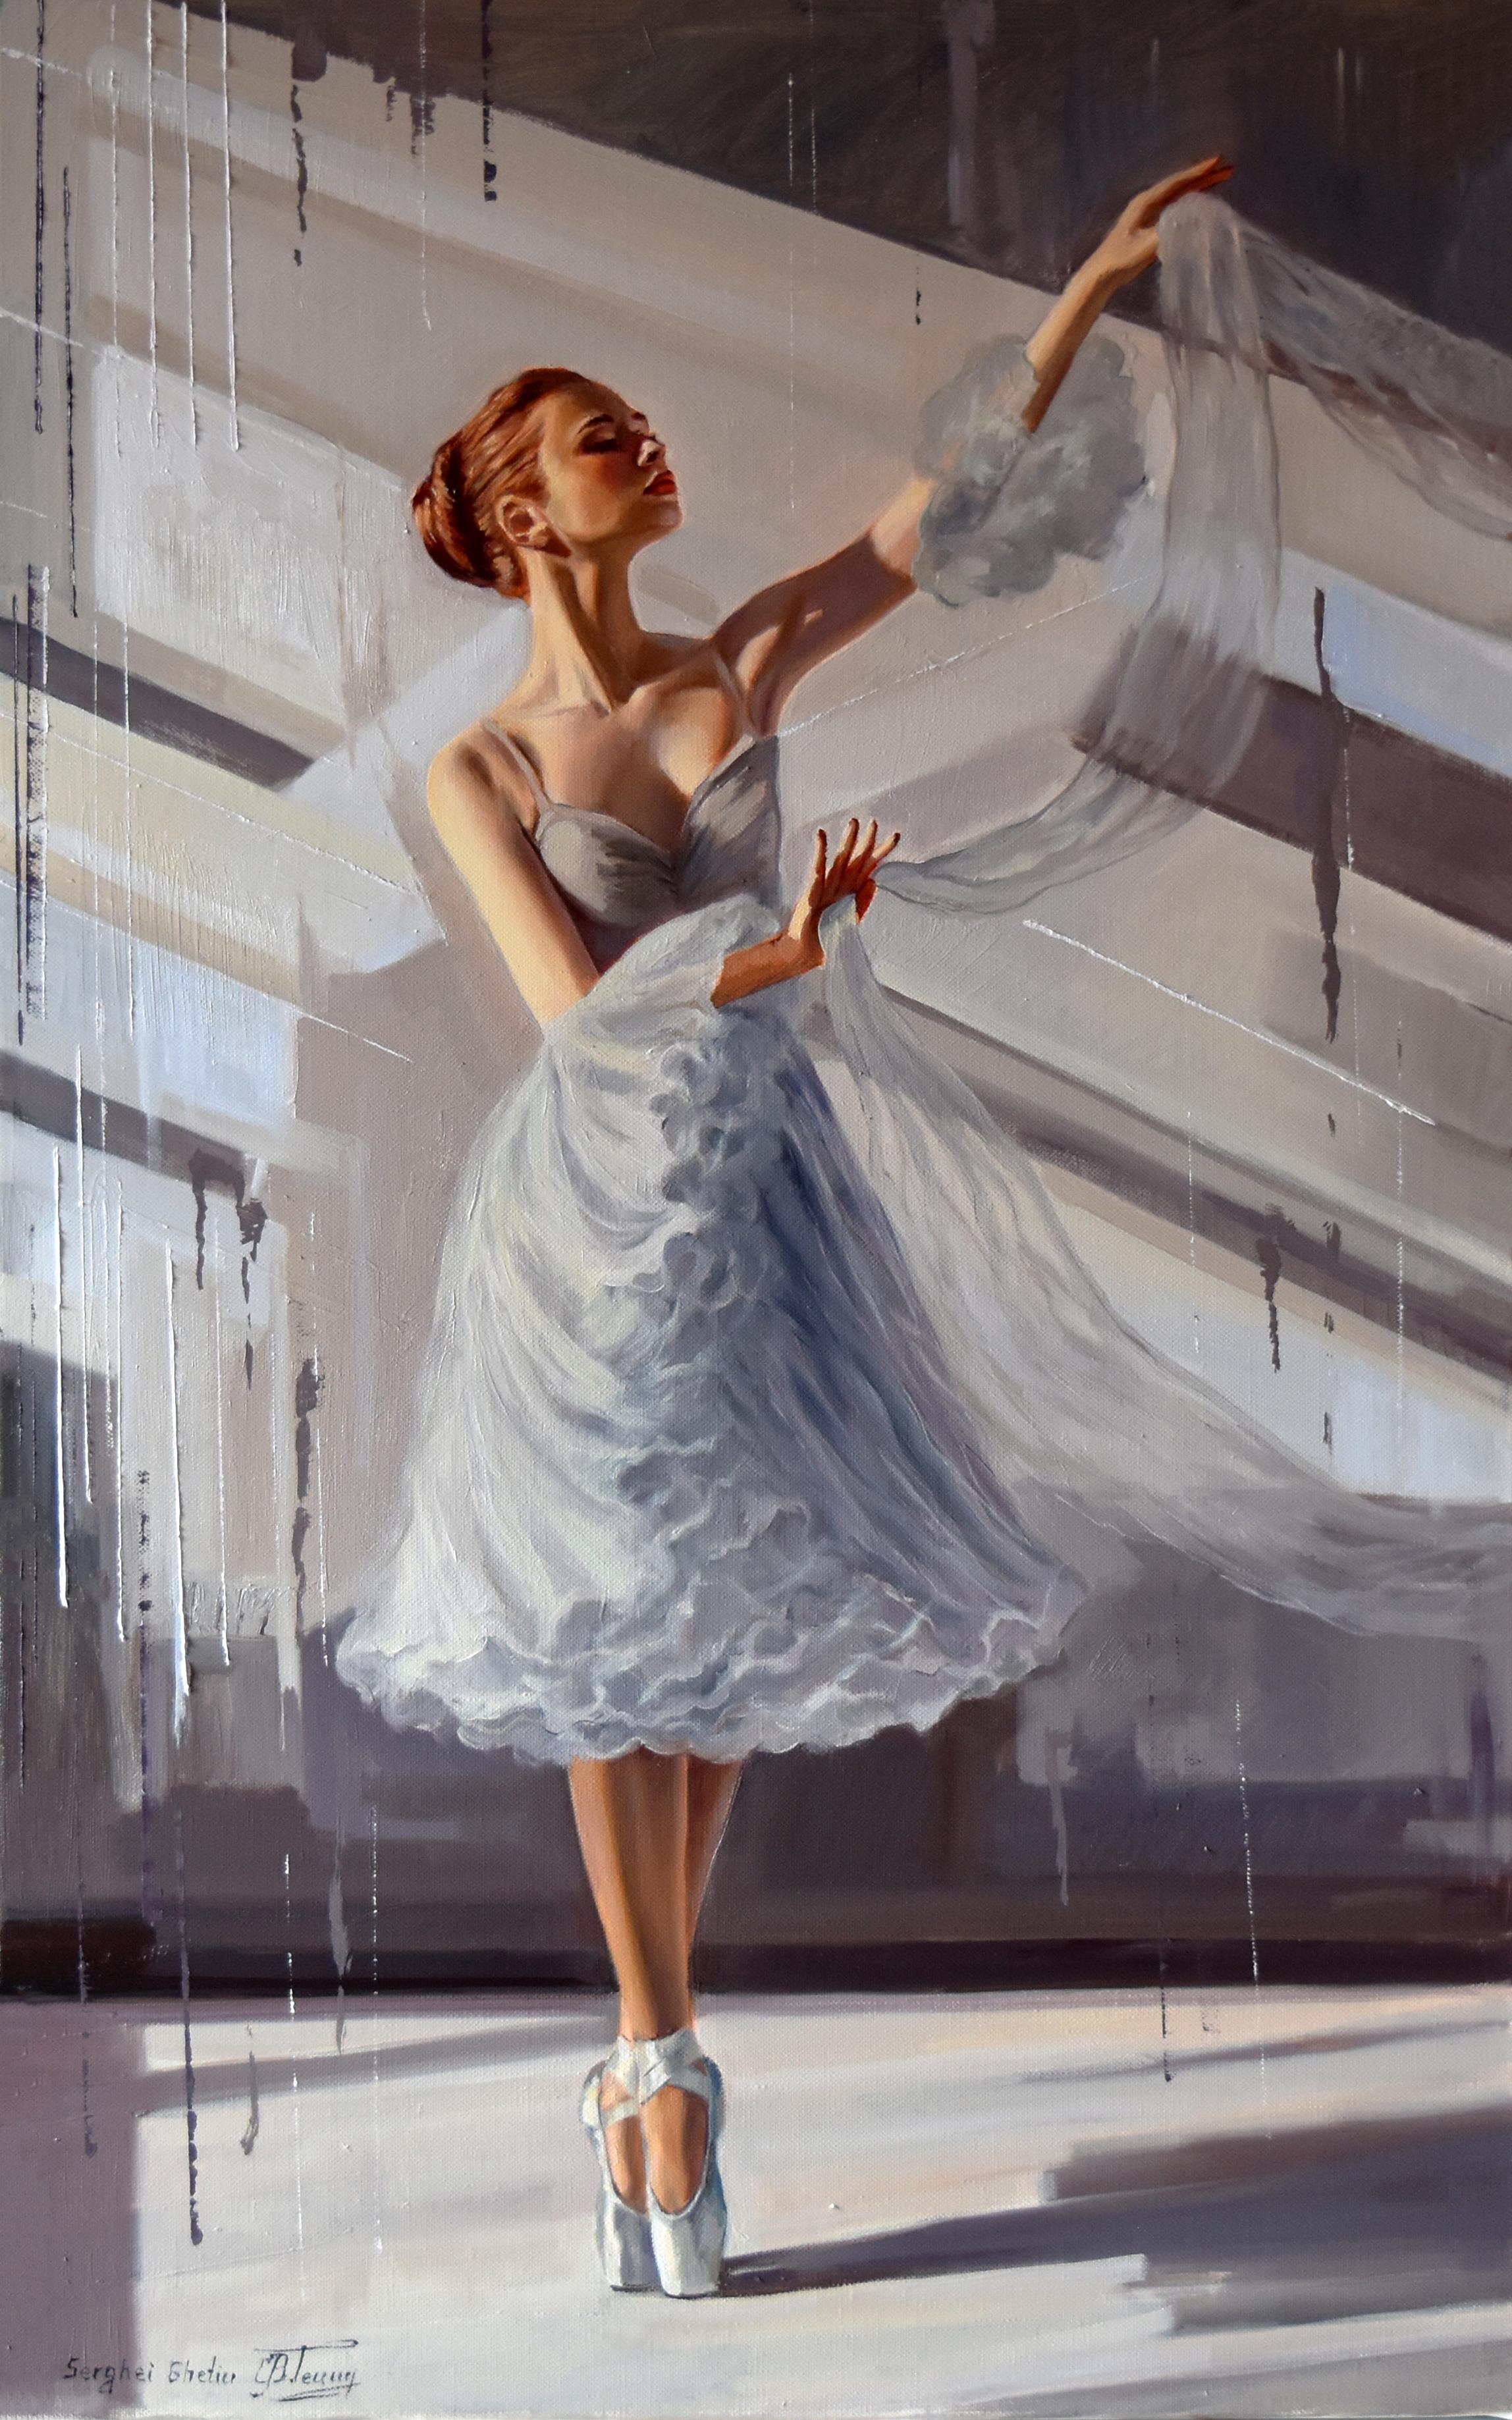 Serghei Ghetiu Figurative Painting - The beauty of dance XII